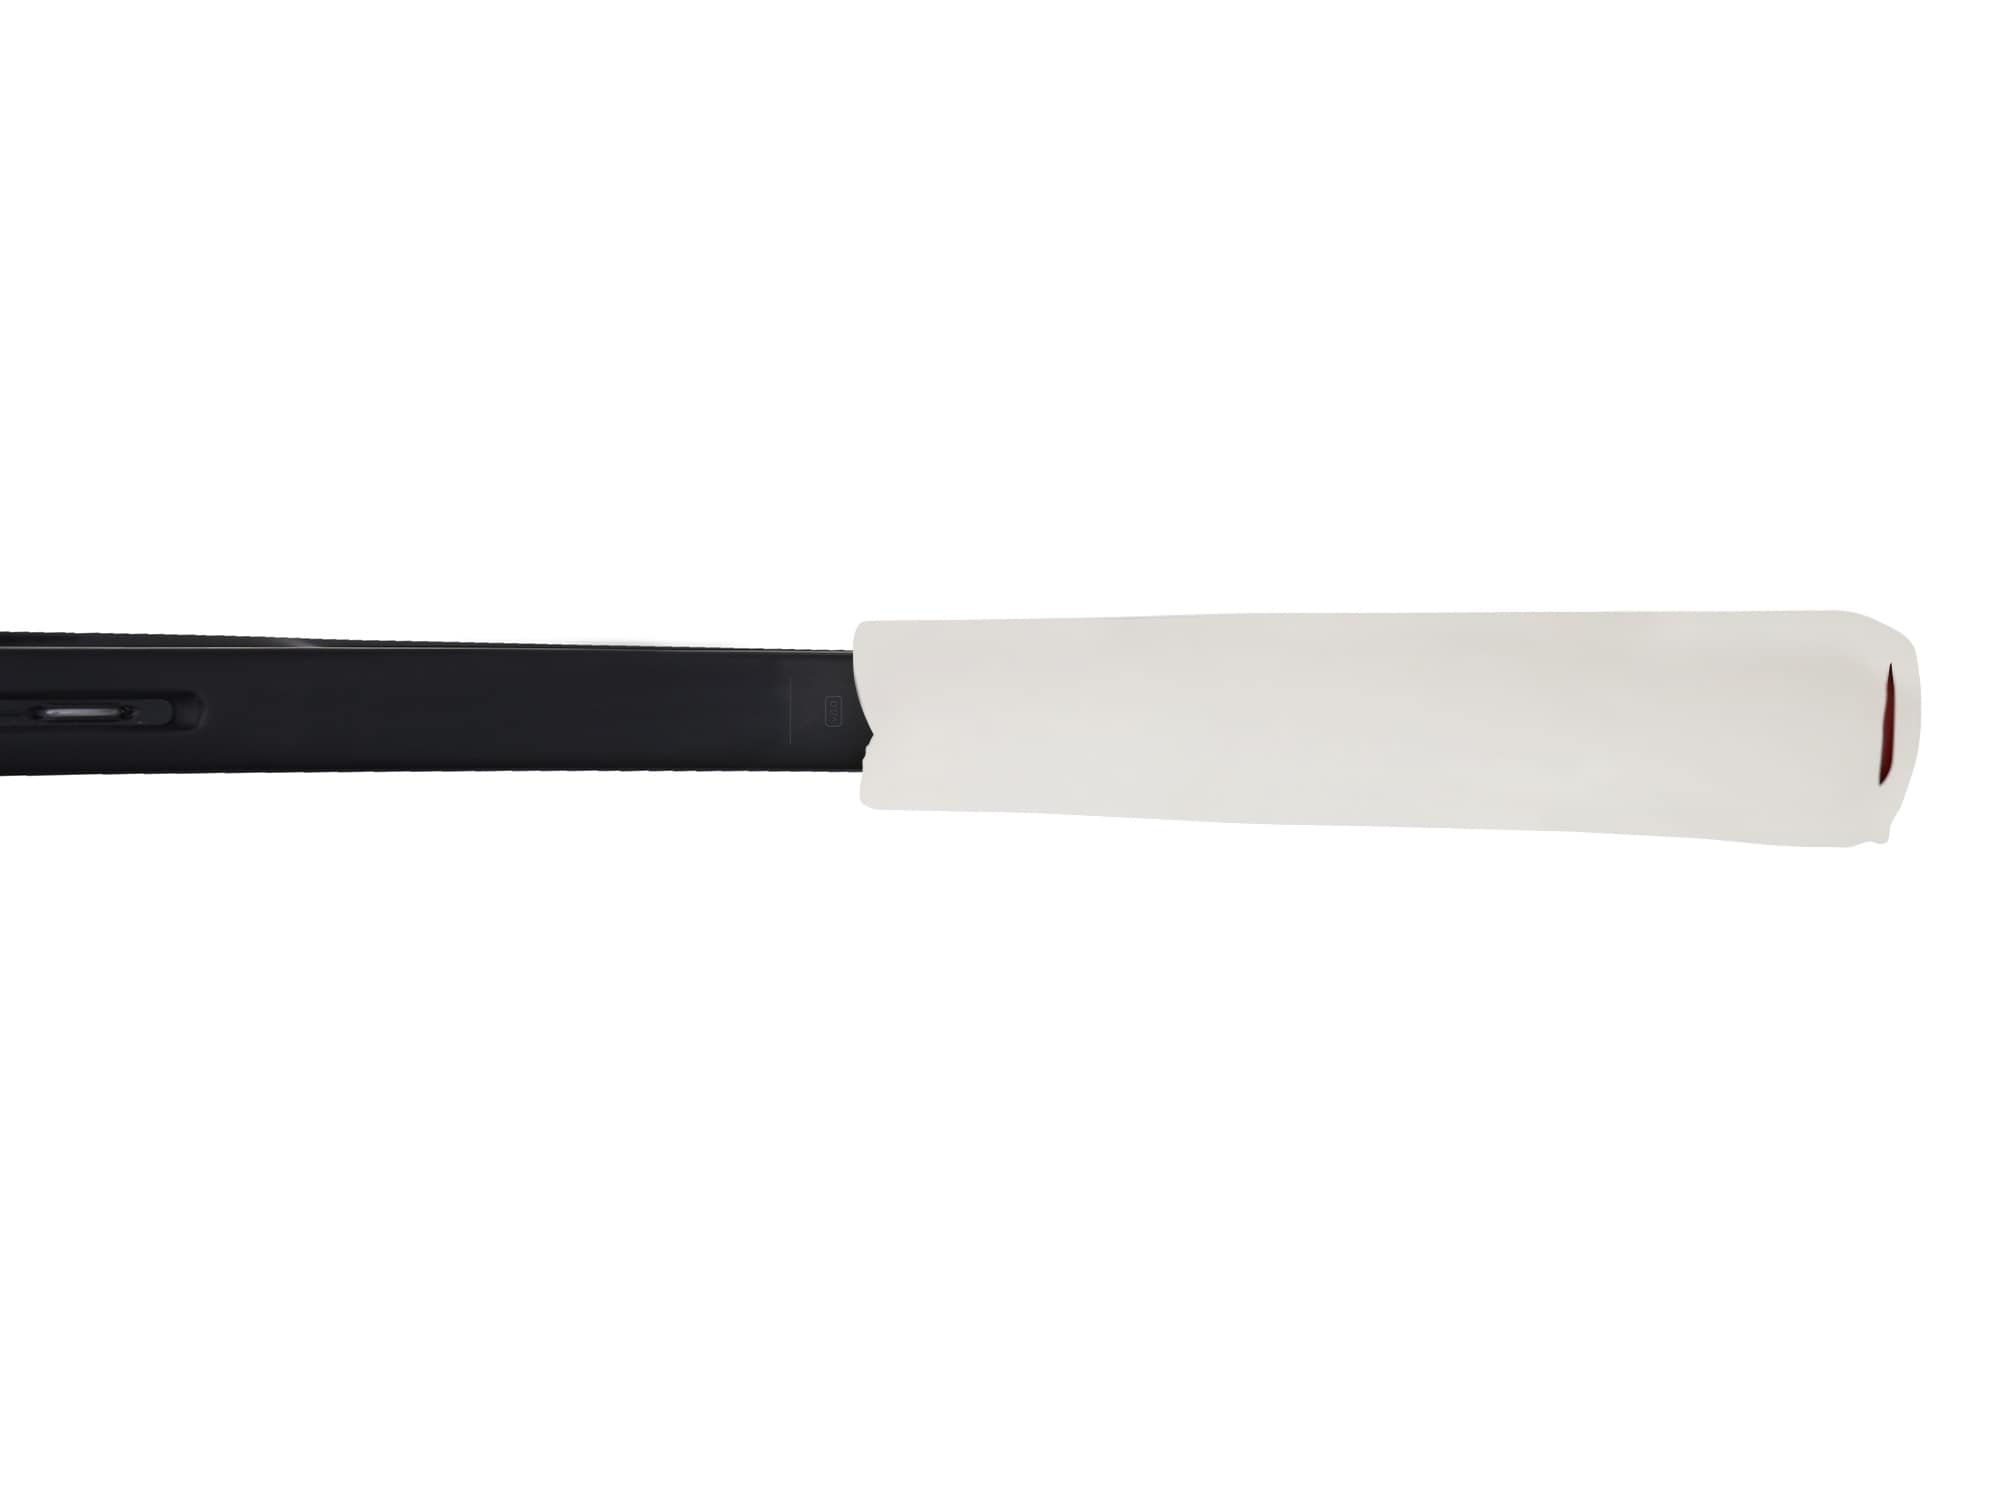 Epirus Neoprene Grip Cover (Bright White) protect your tennis racket handles